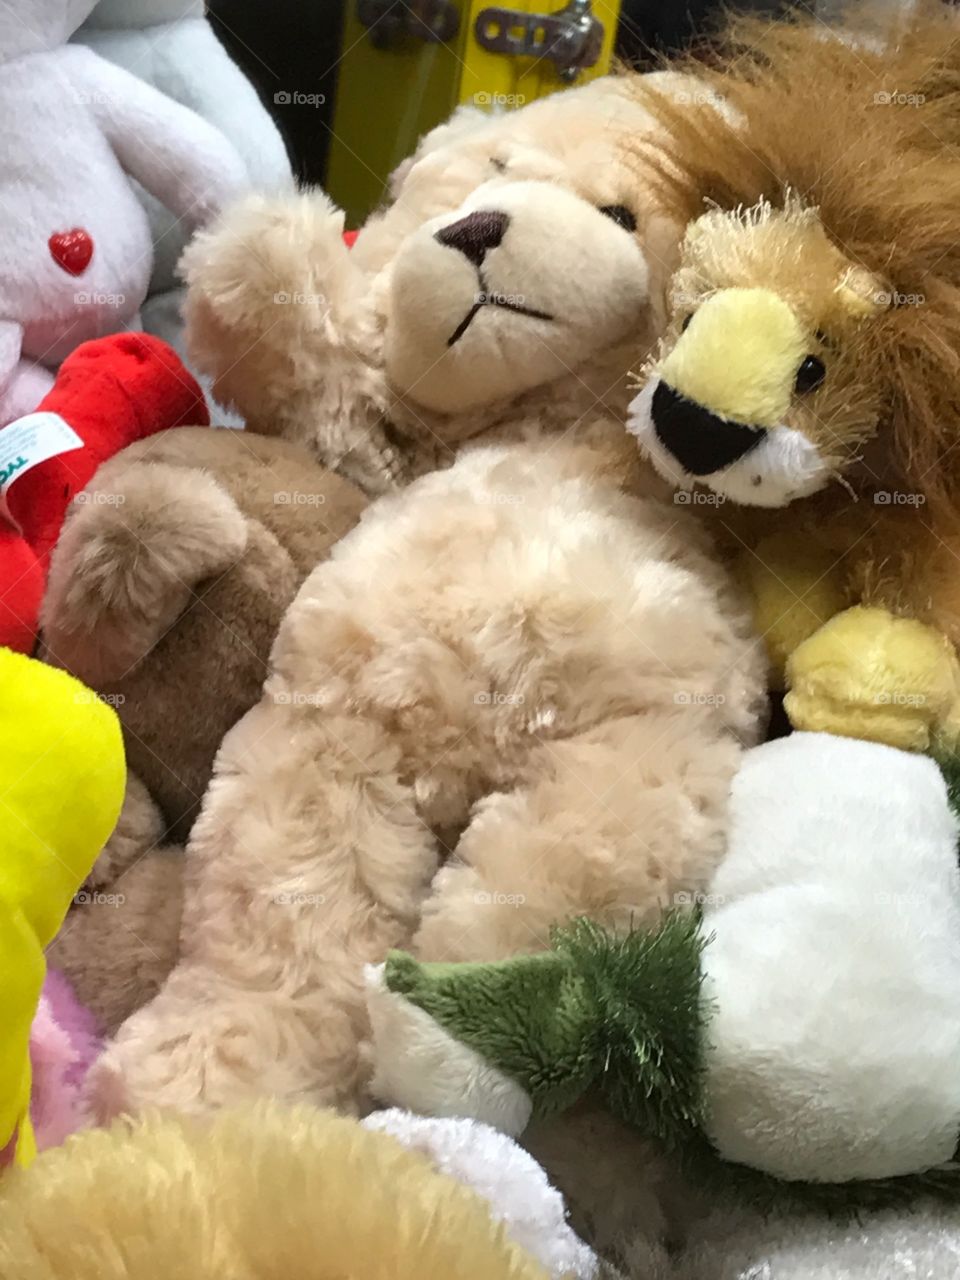 Stuffed animals 